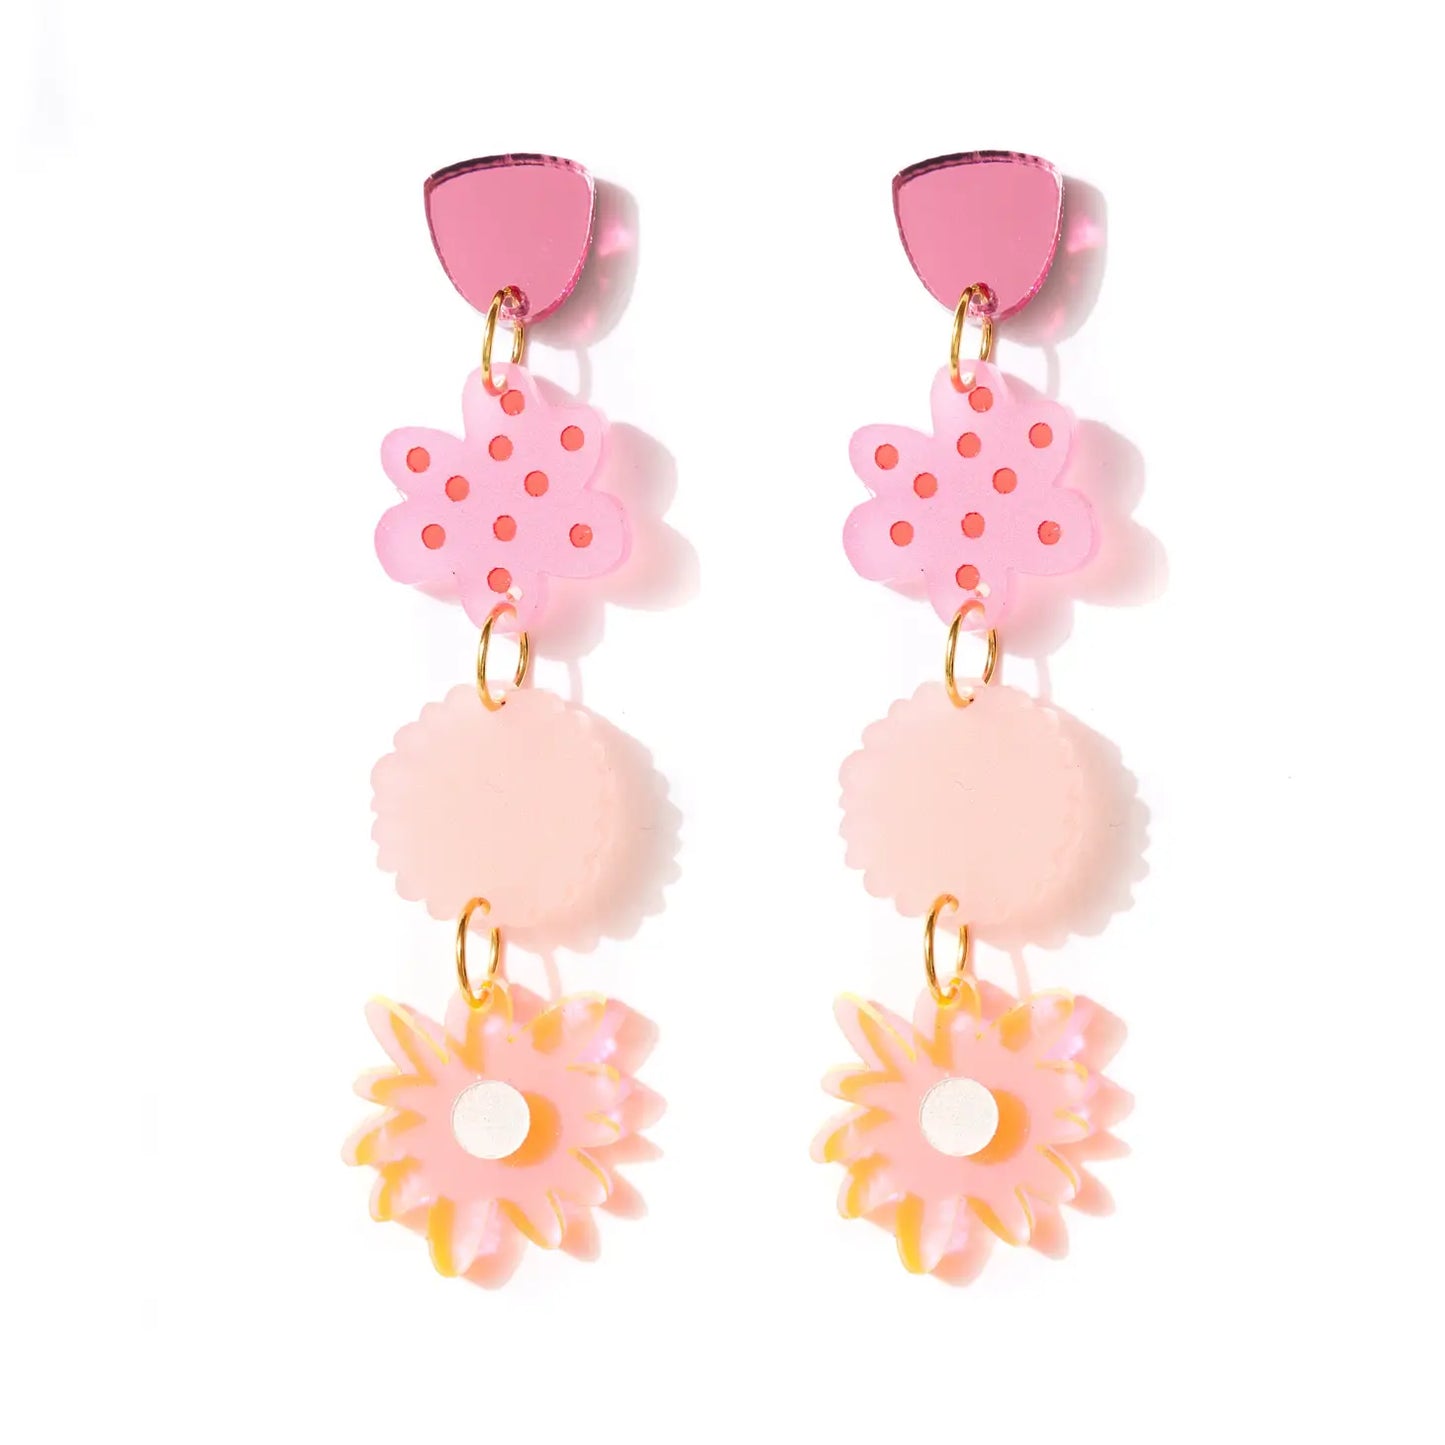 Zozo Floral Earrings - Pinks and Oranges